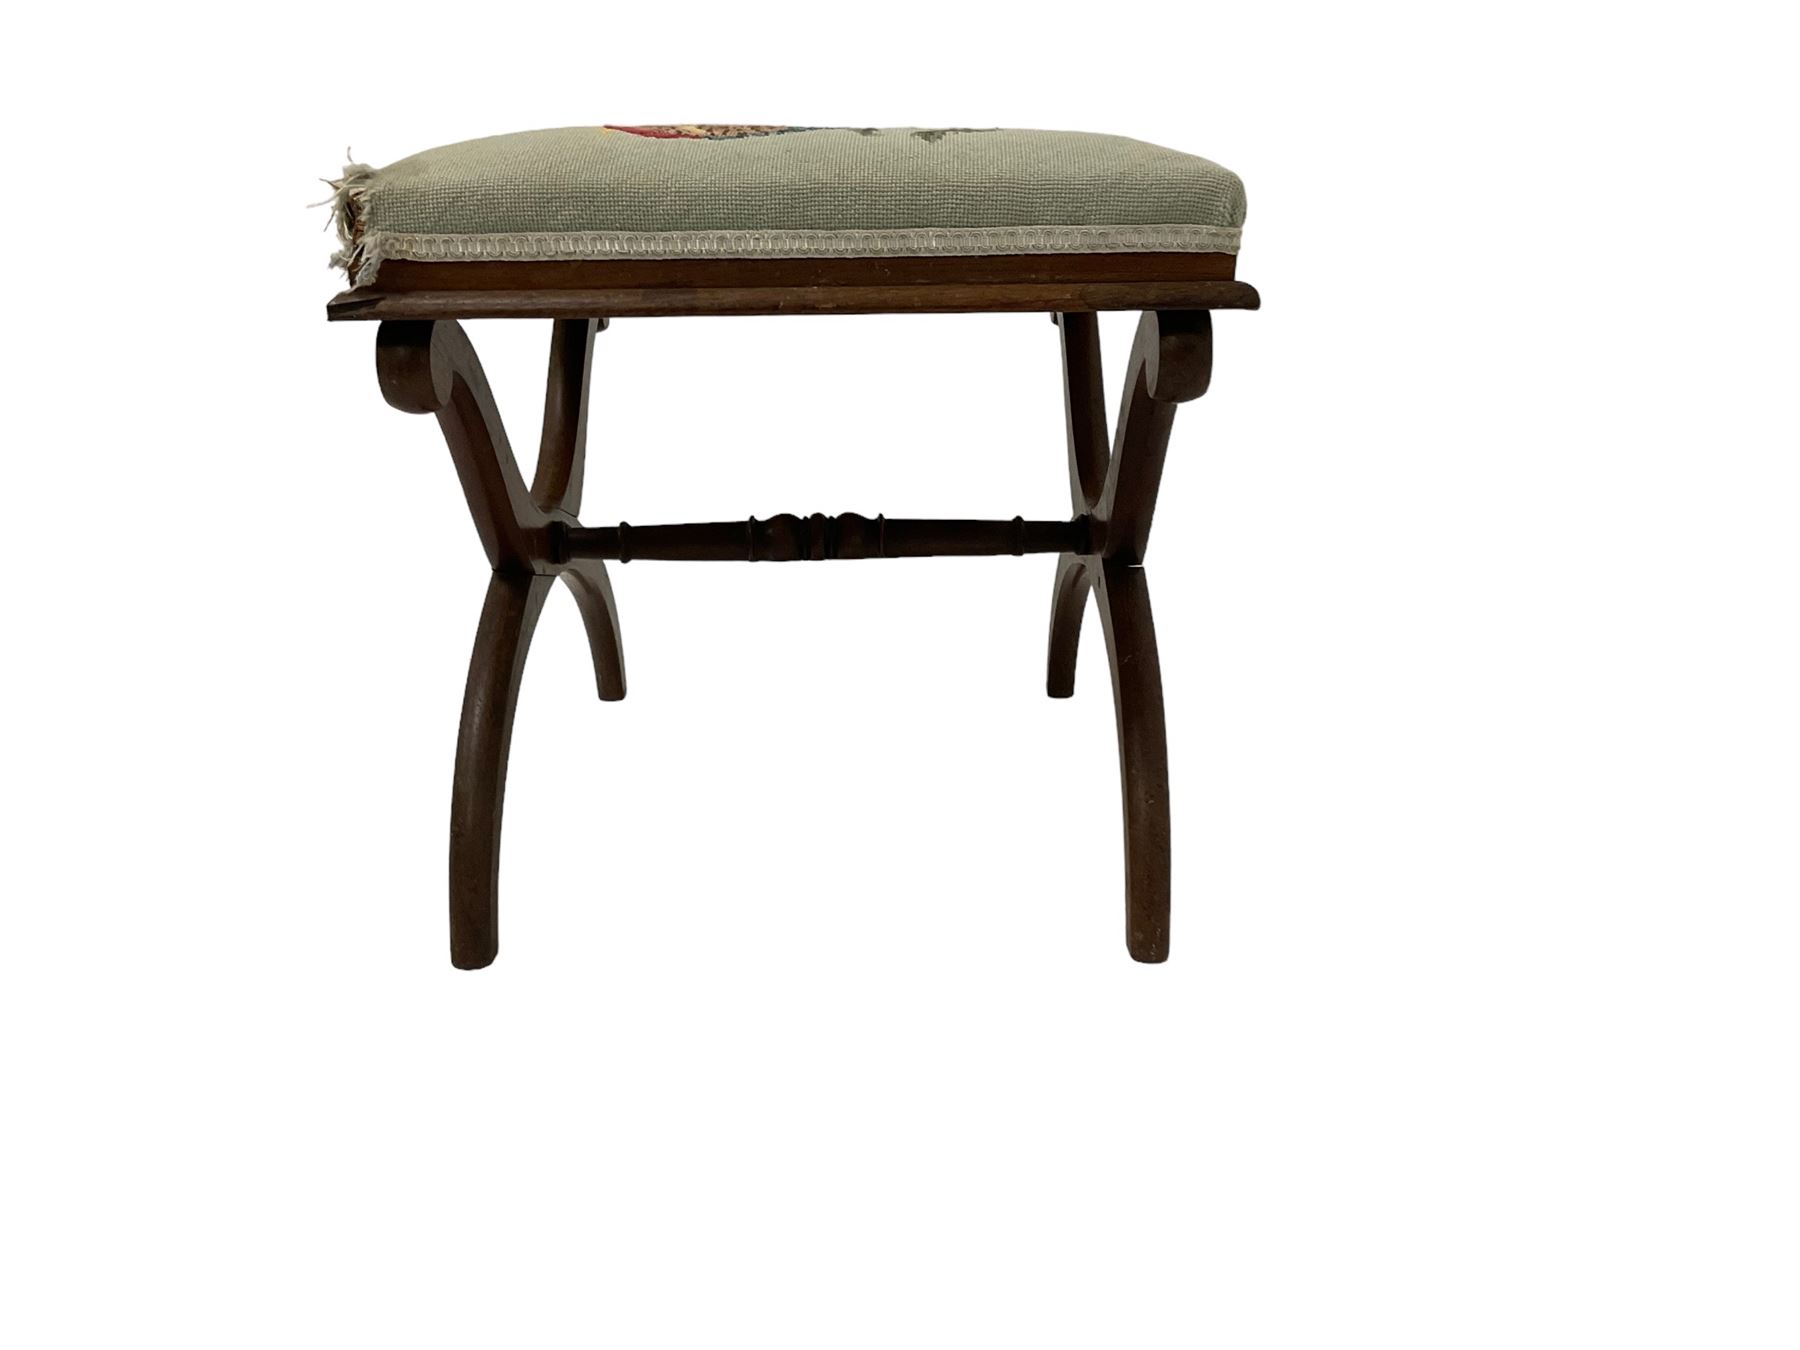 19th century rosewood stool